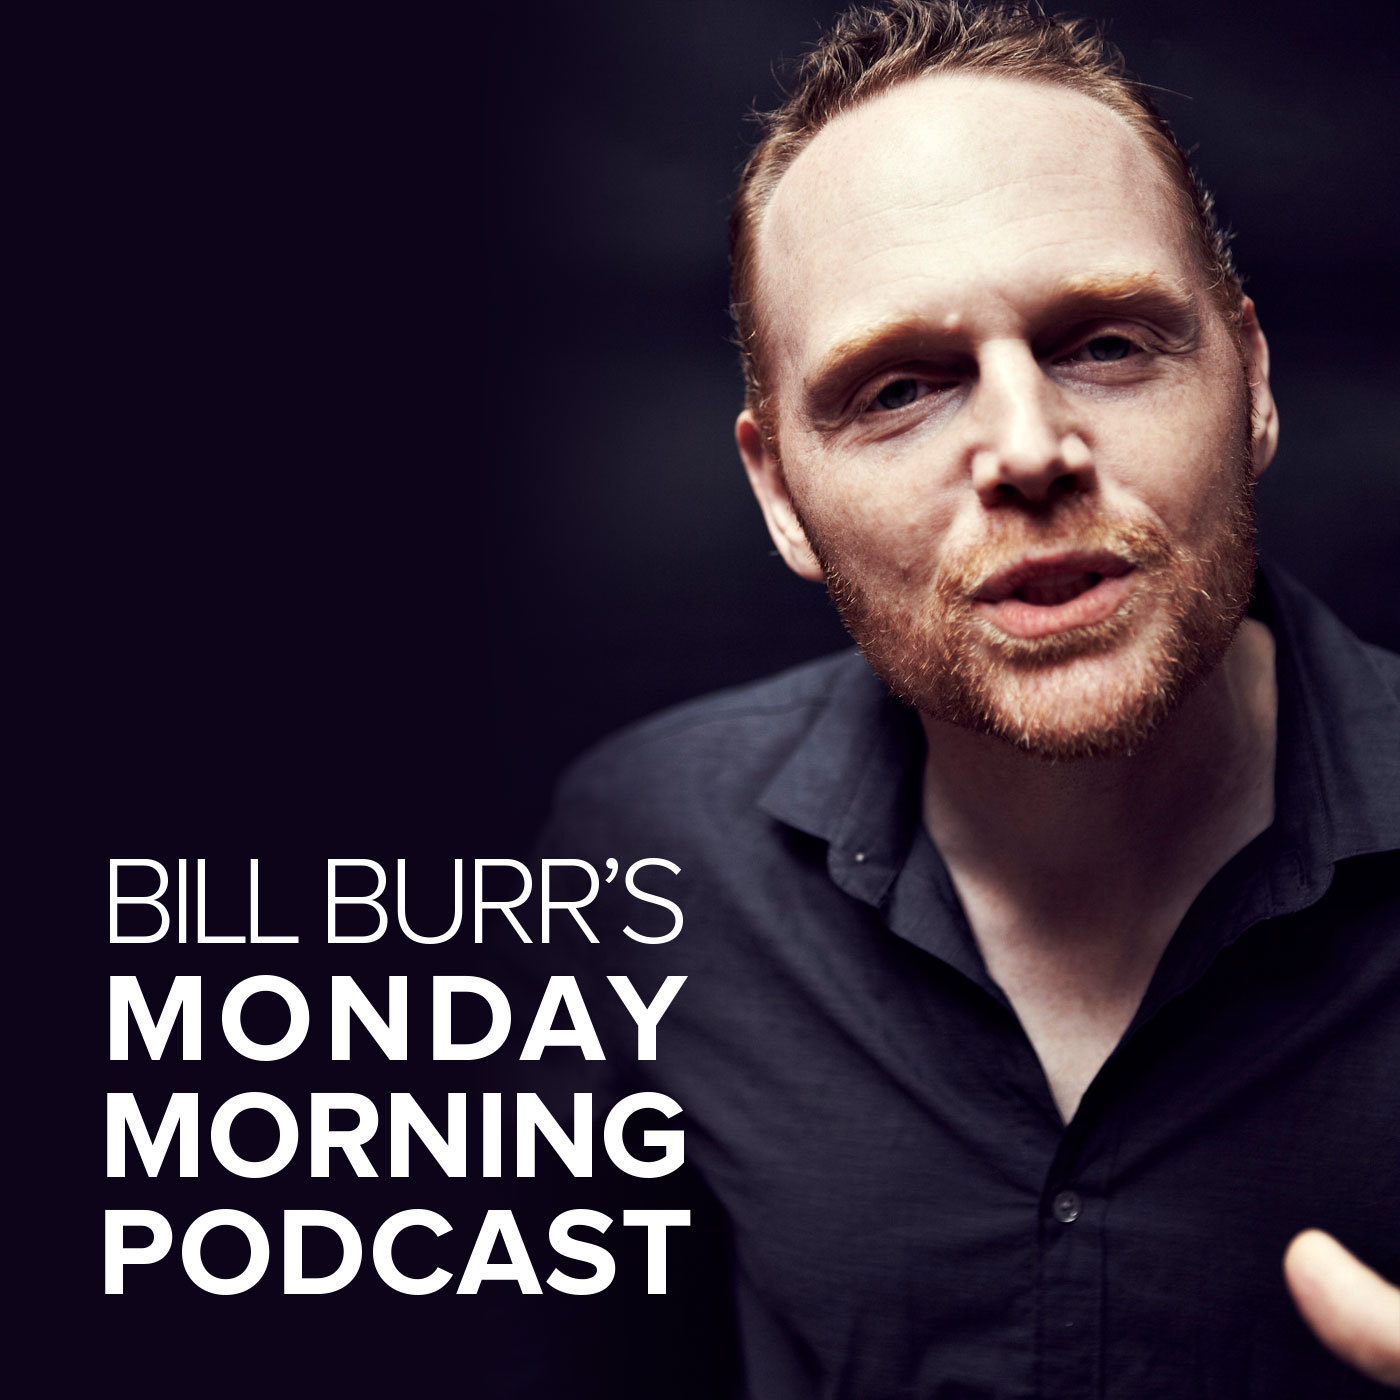 Monday Morning Podcast 4-8-13